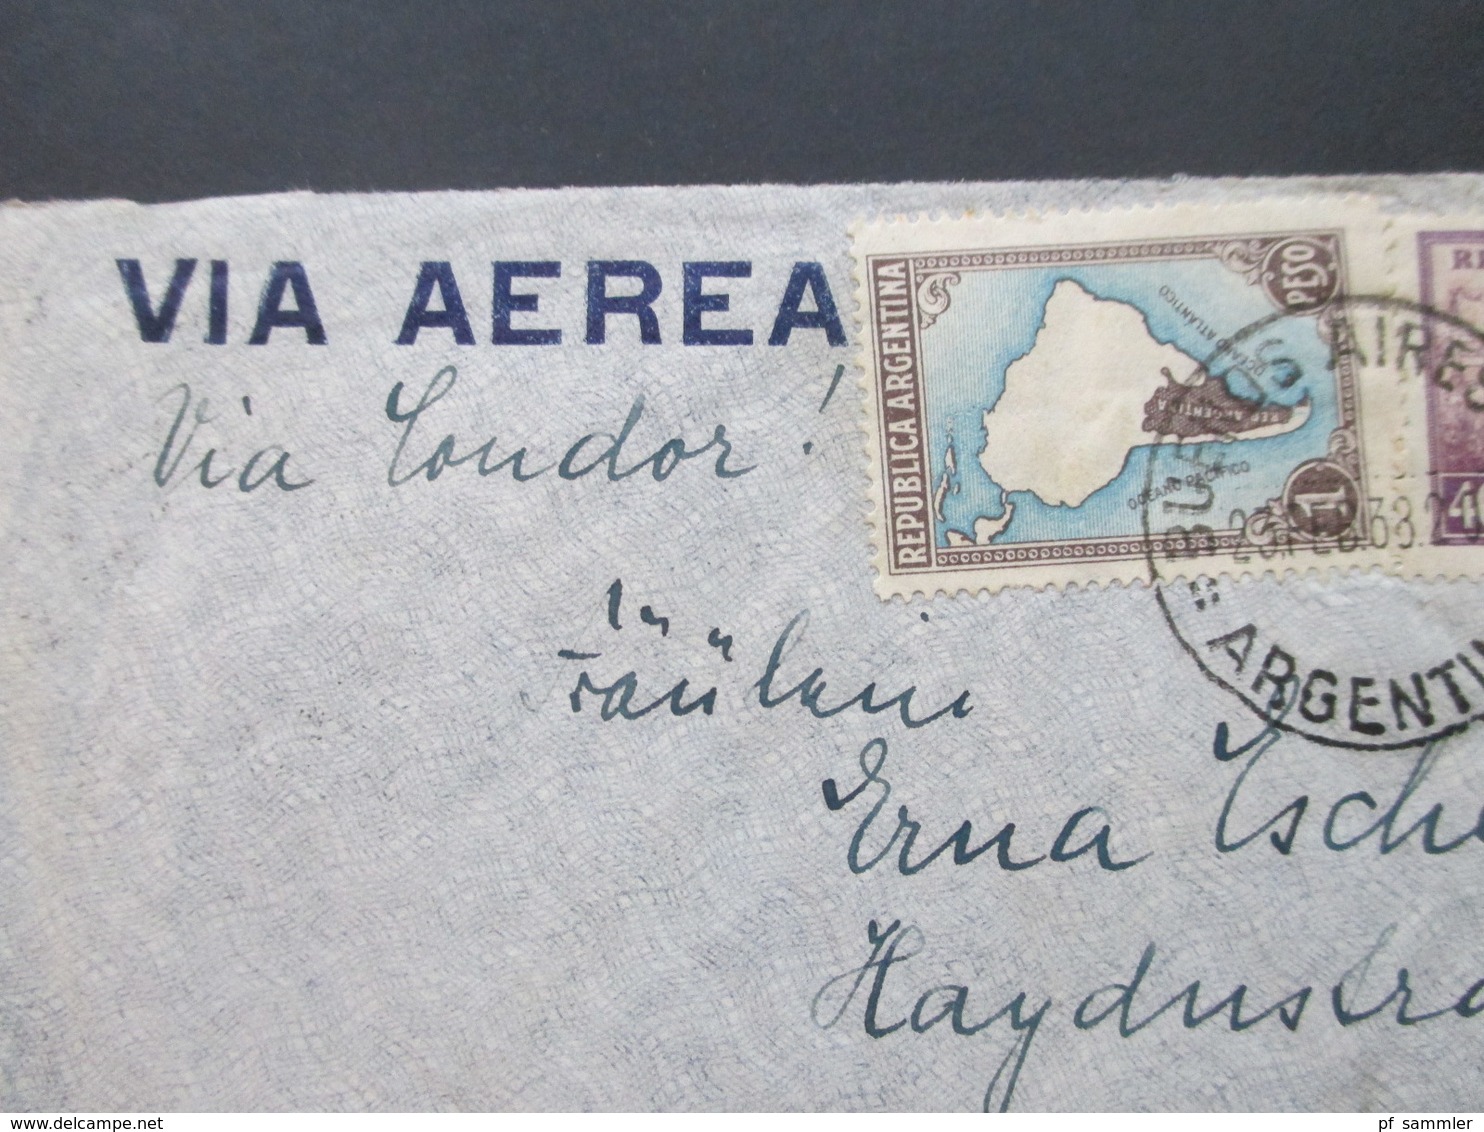 Argentinien 1938 Via Aerea / Luftpost Via Condor  Buenos Aires Nach Dresden - Covers & Documents